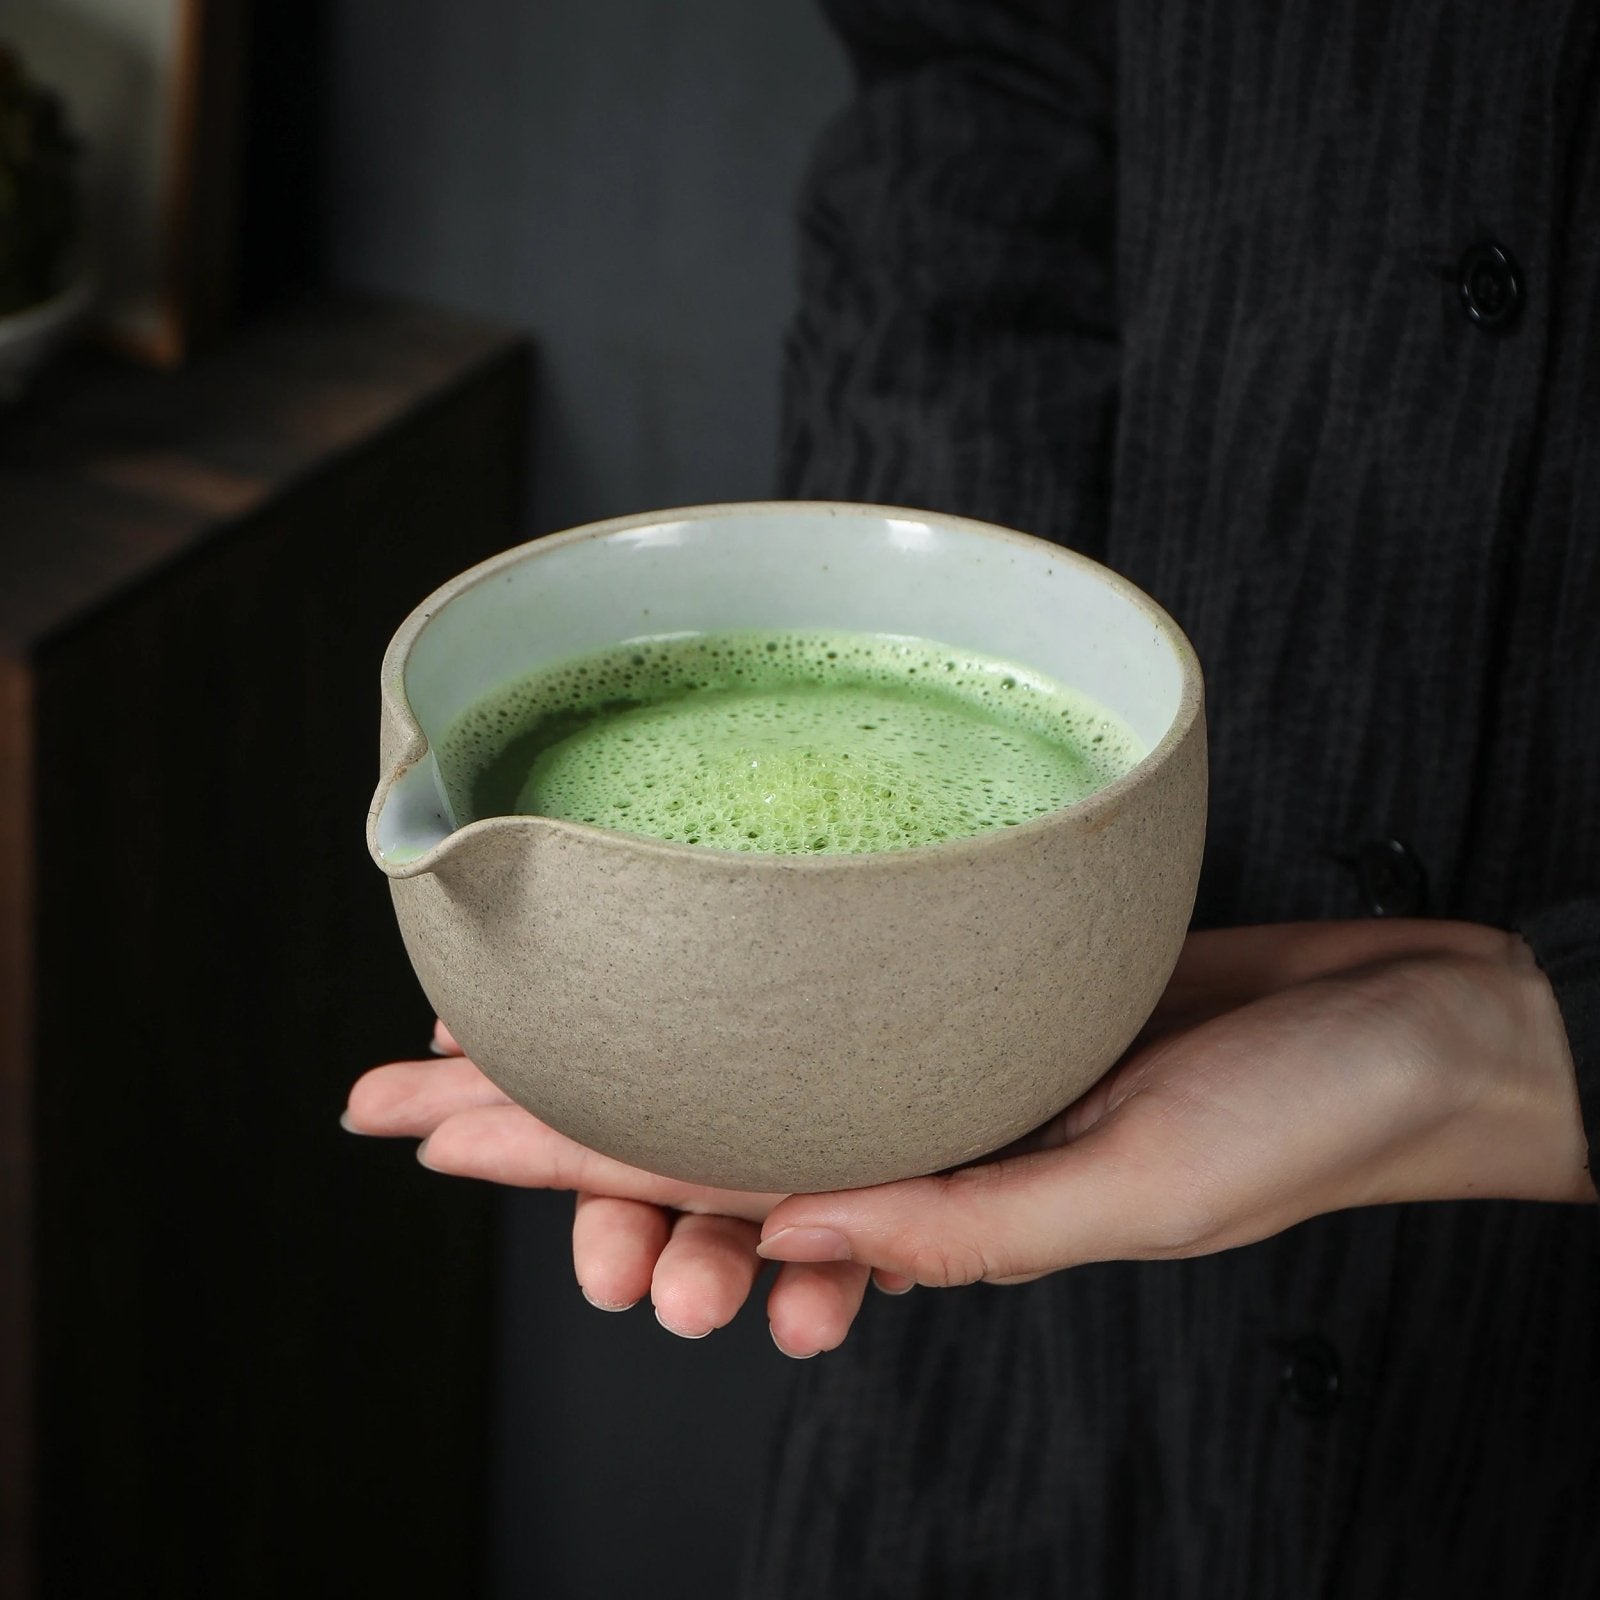 Matcha Set Sakura Premium - SHO CHA - Green Tea from Japan